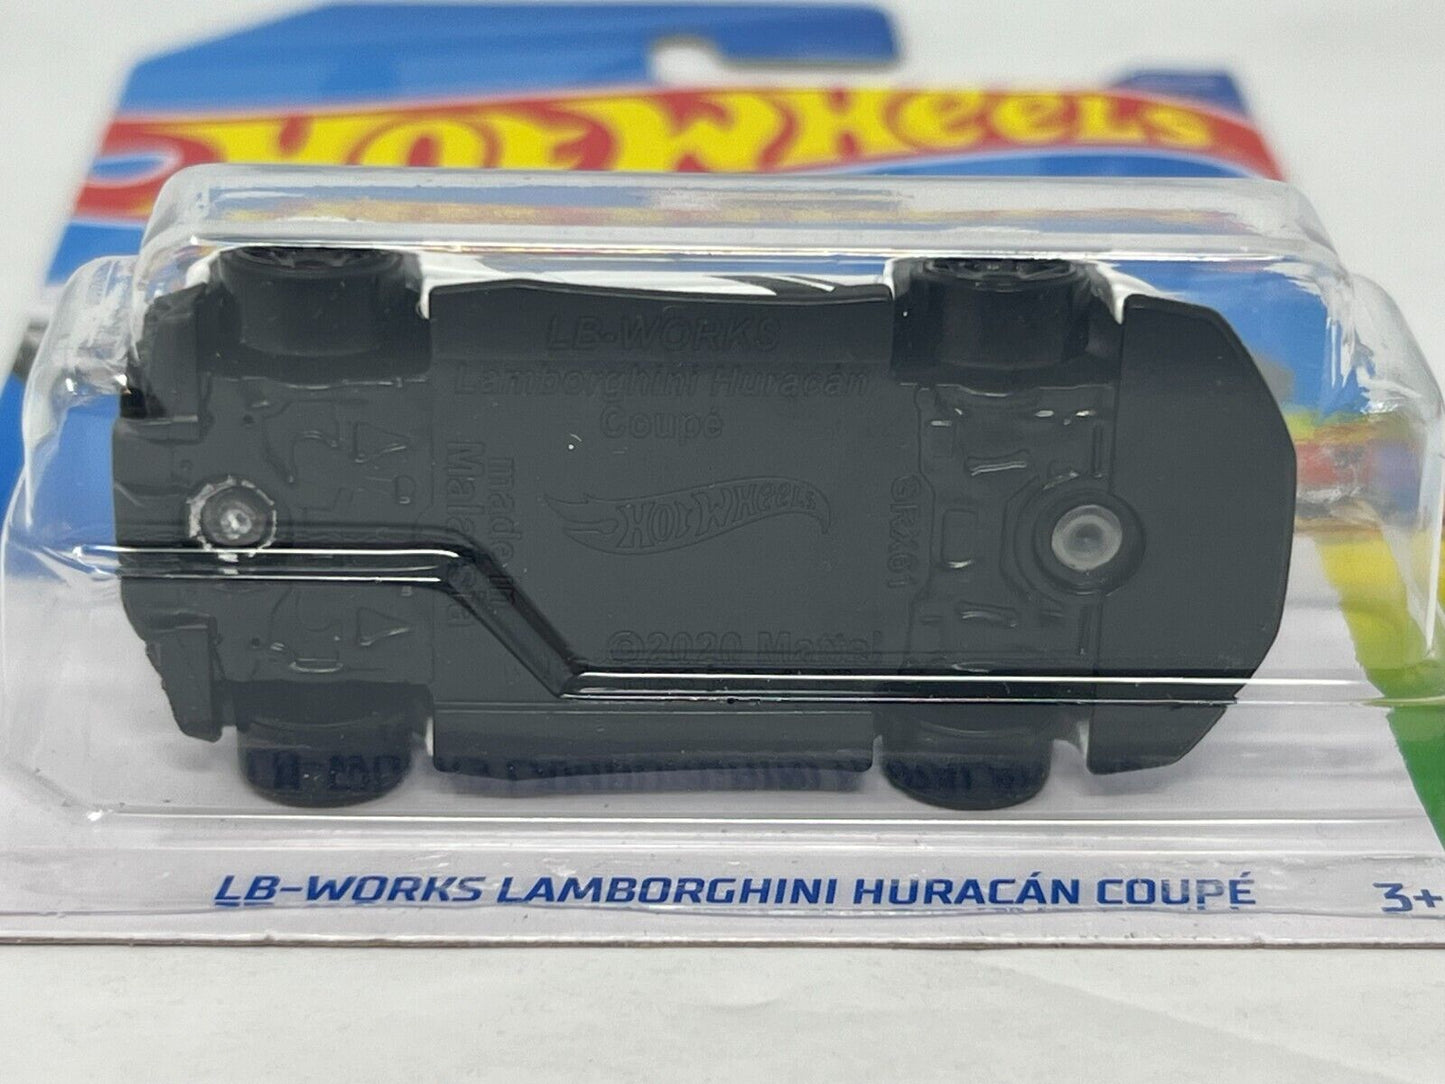 Hot Wheels HW Exotics LB-Works Lamborghini Huracan Coupe 1:64 Diecast